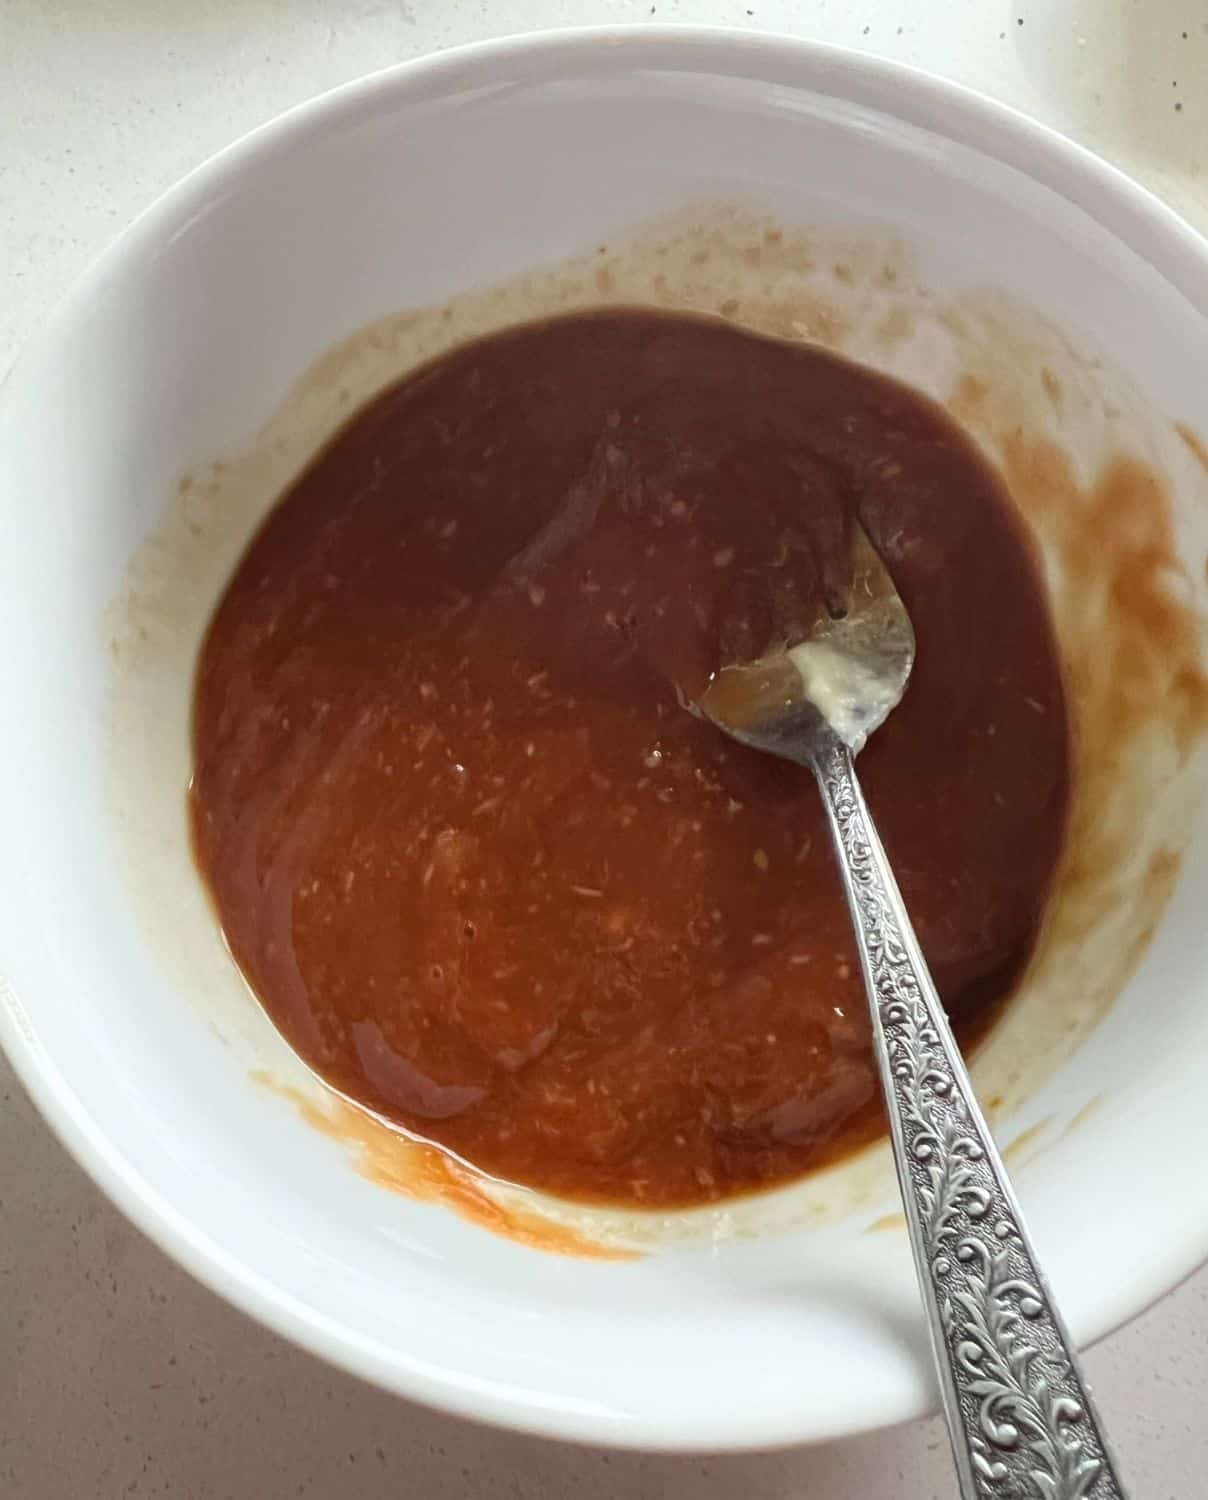 Ketchup, Sauce, and Horseradish mixed together in a bowl. 